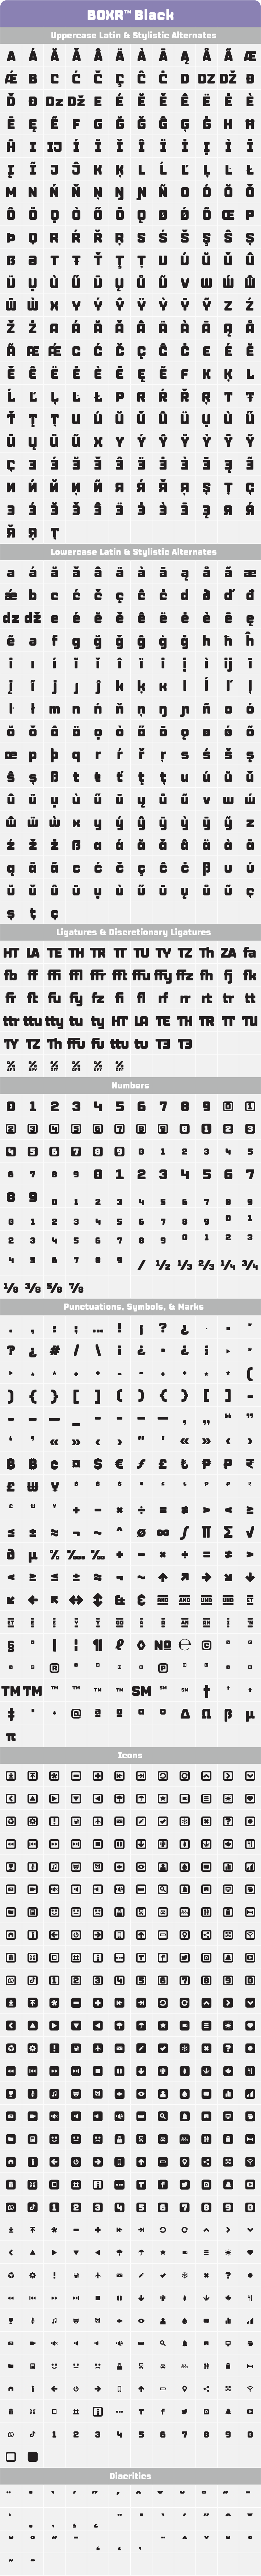 Boxr-Fonts-Black-Glyph-Tables.png